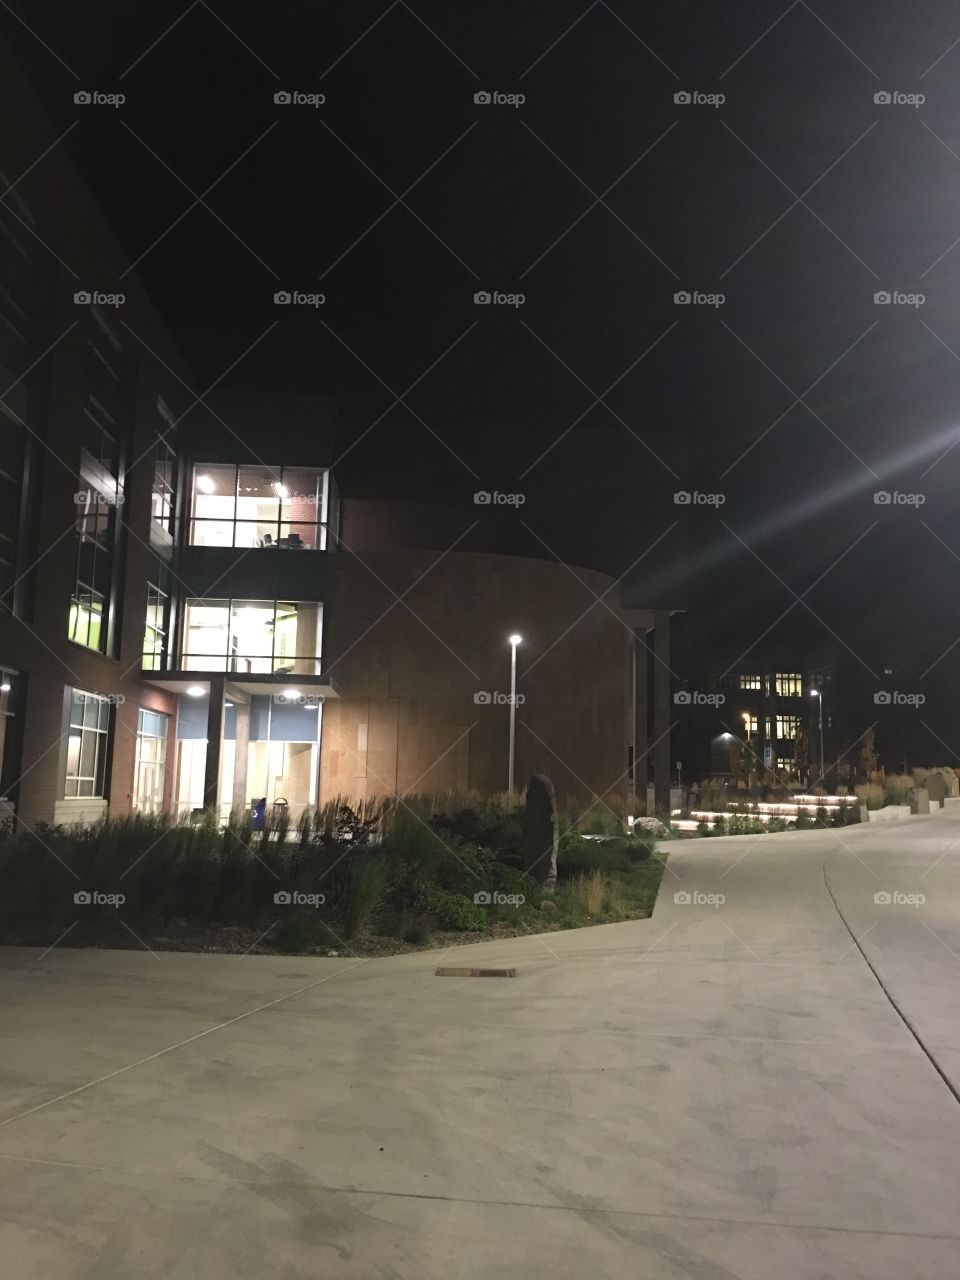 College architecture at night.